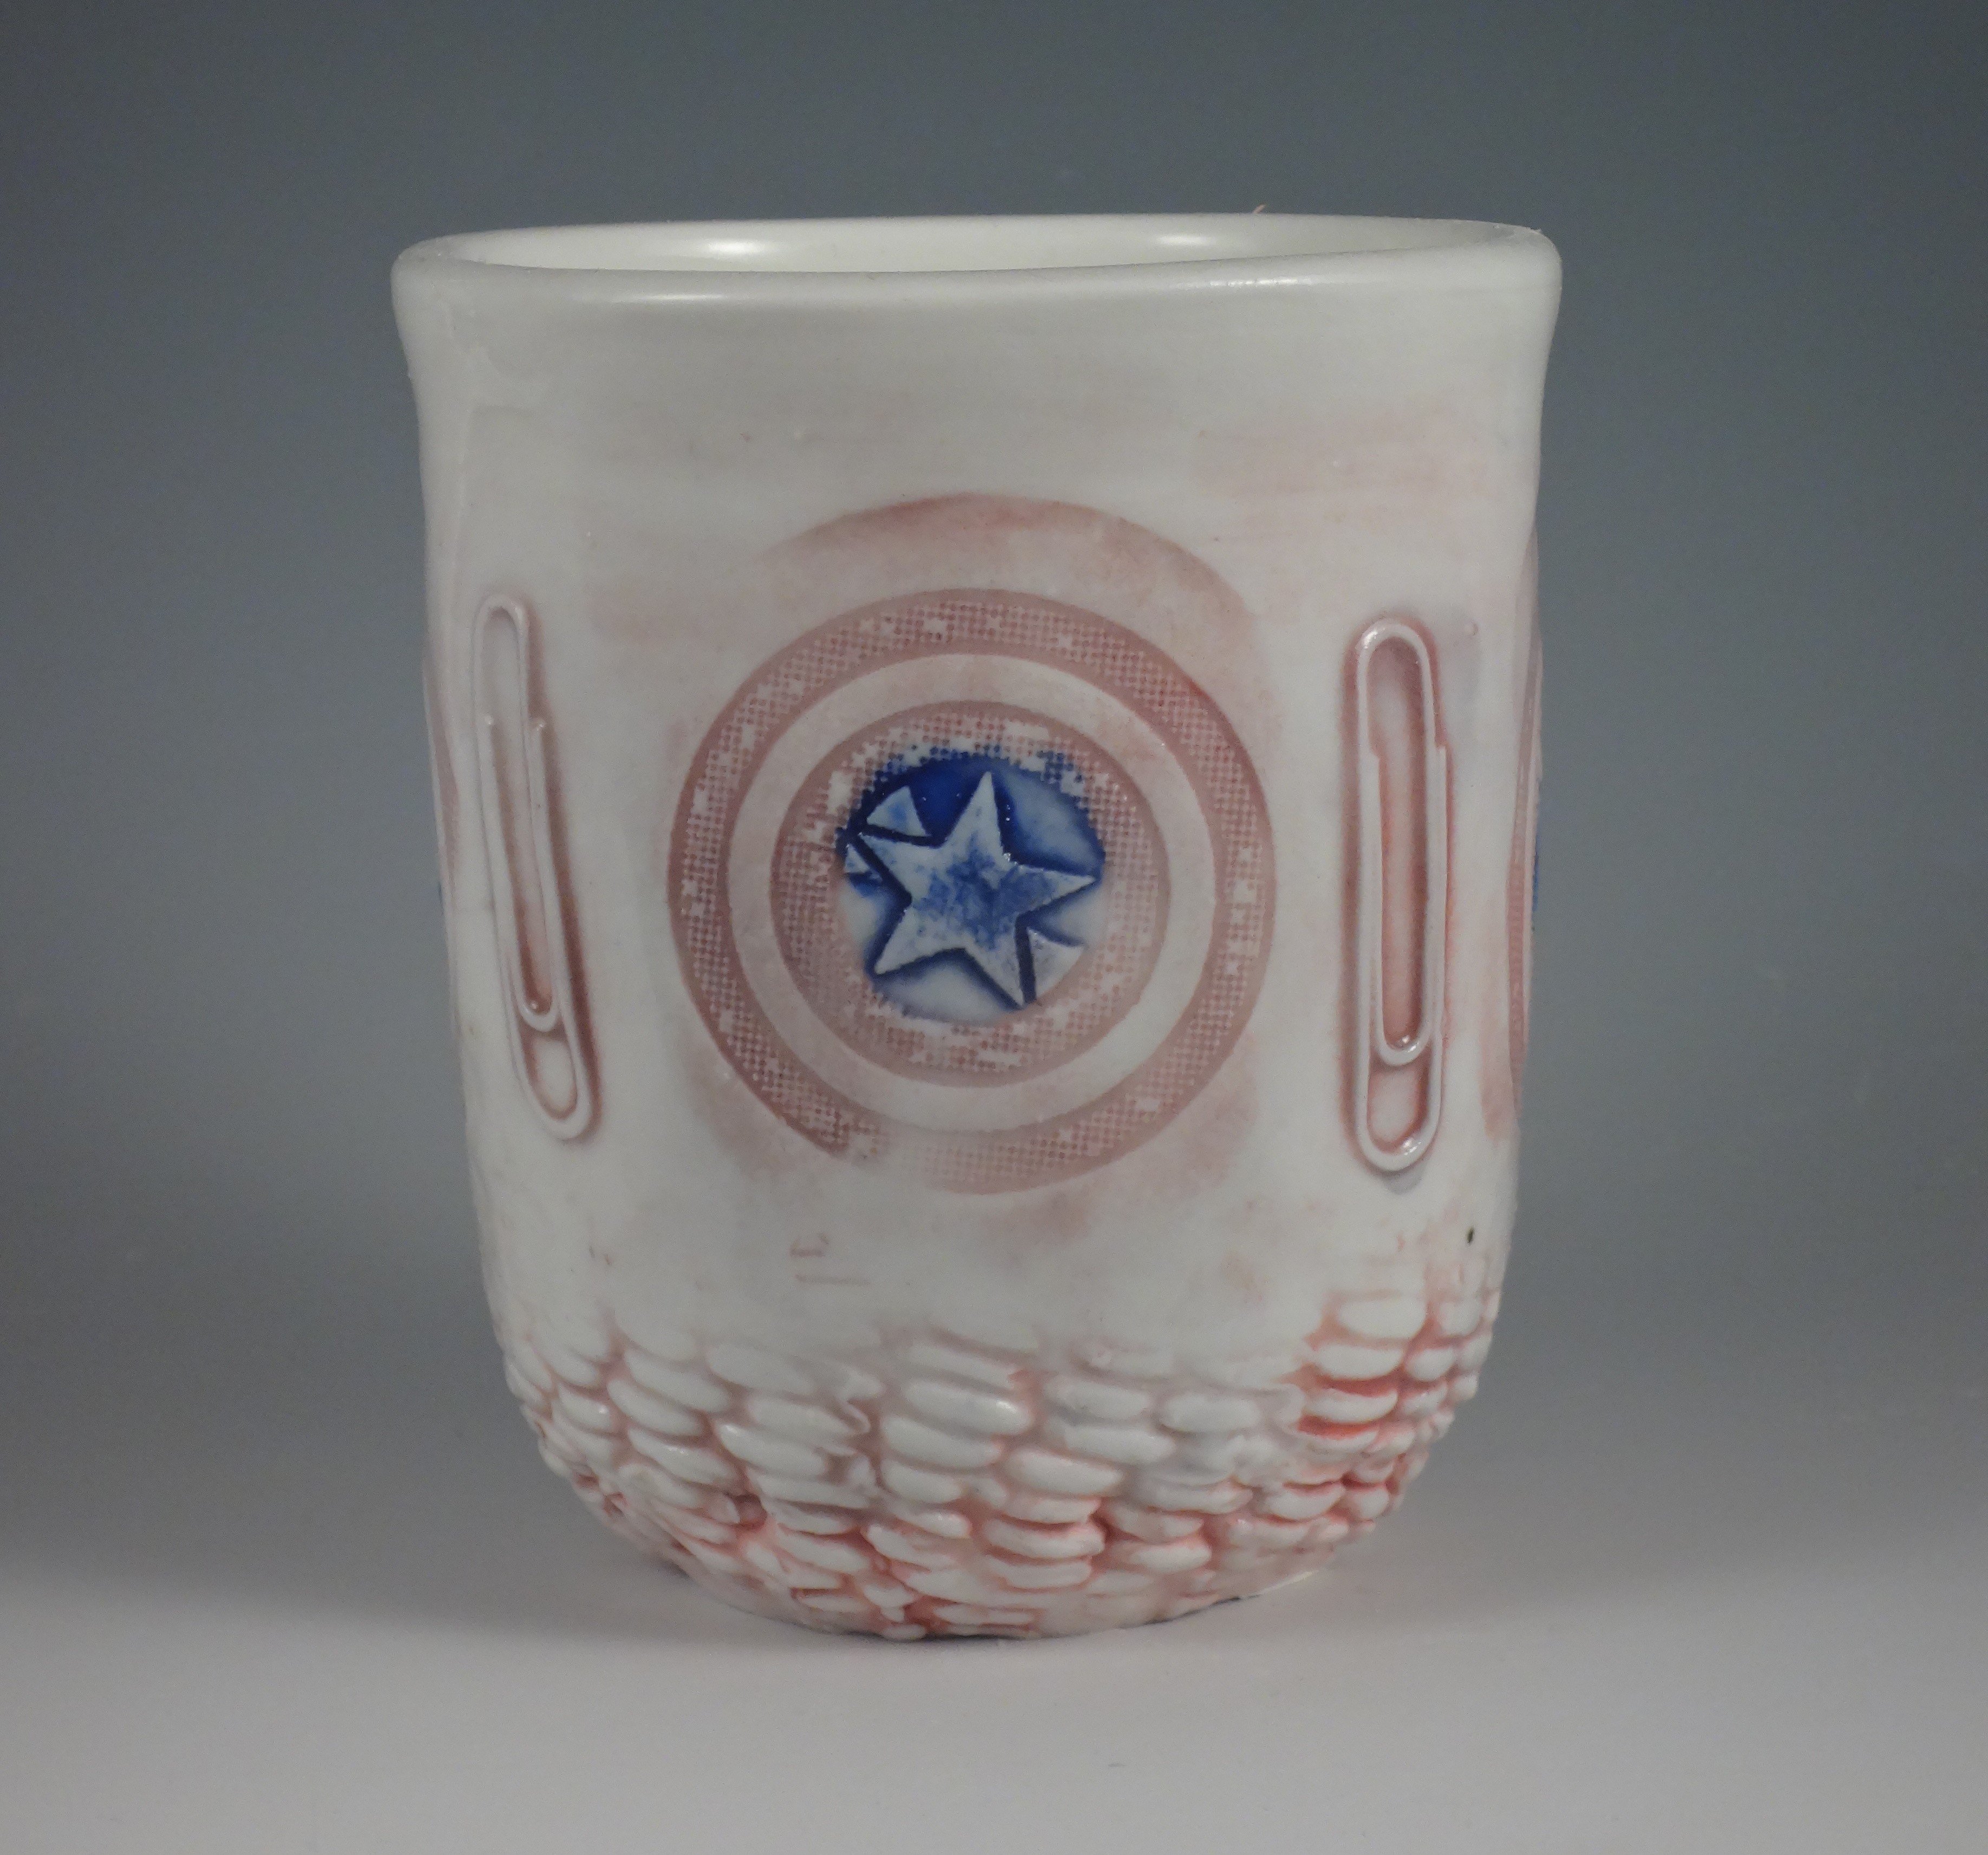 Cup by Ceramic artist Ehren Tool